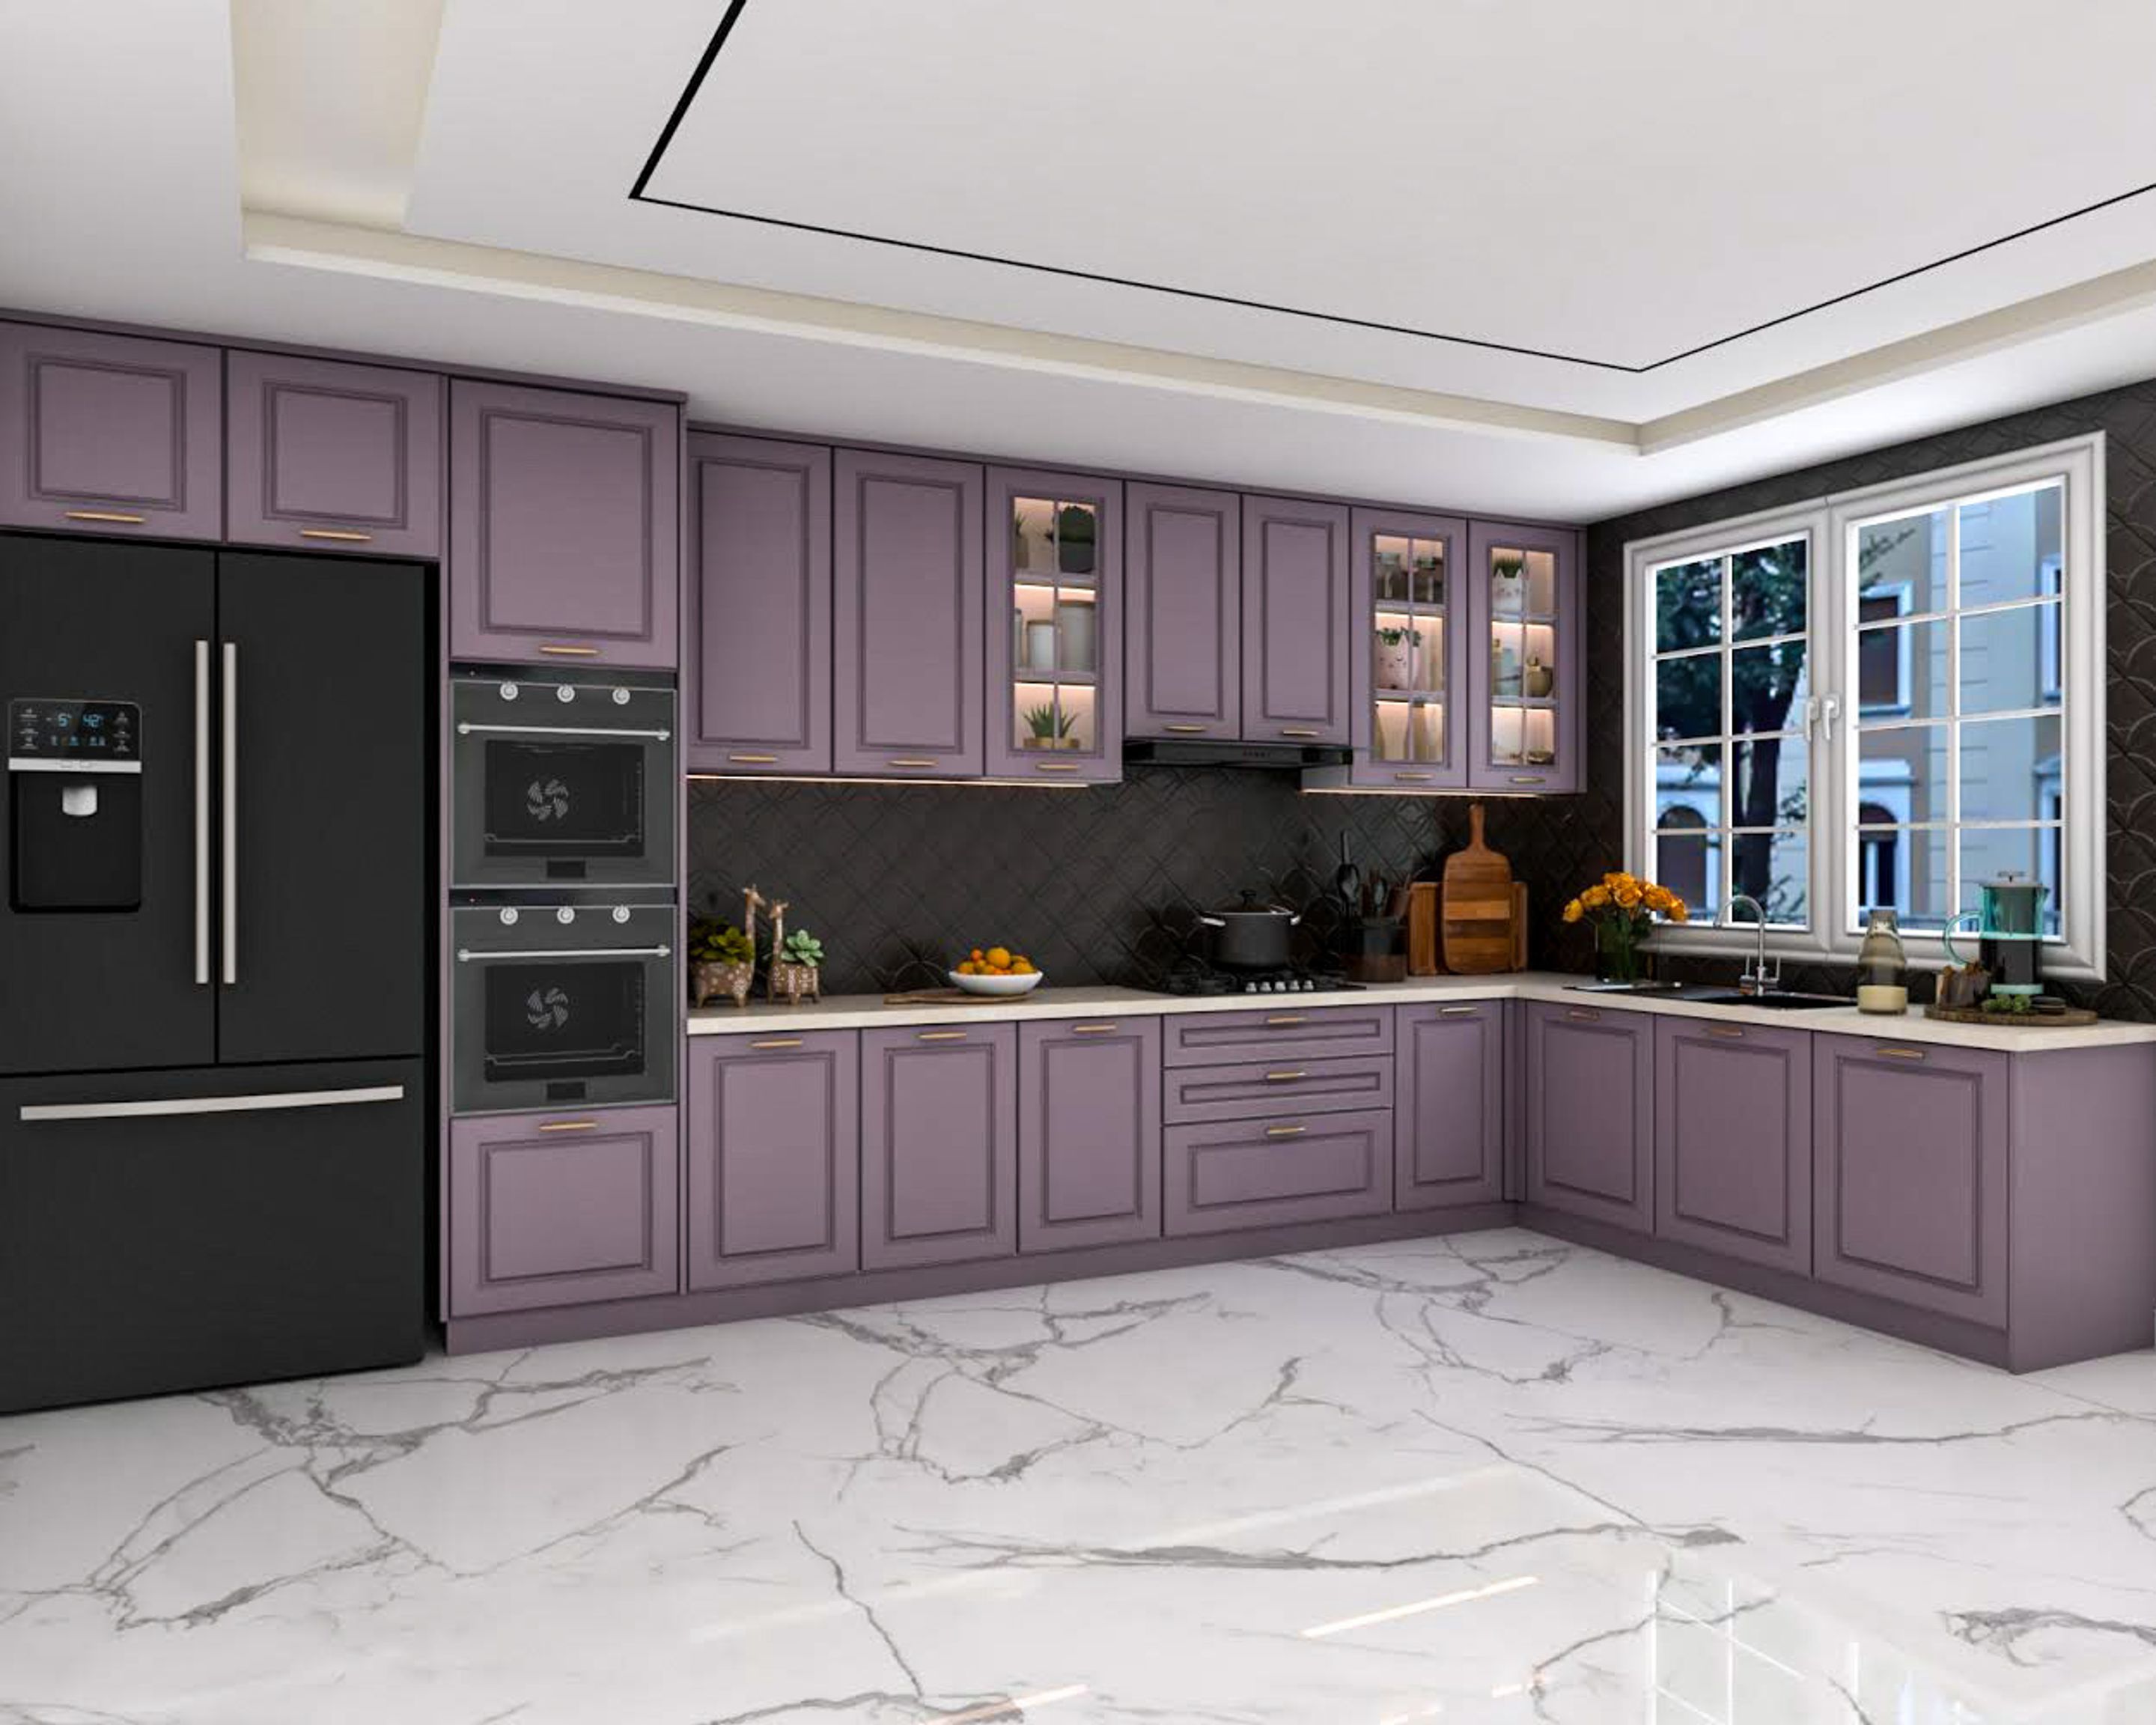 L-Shaped Modular Kitchen Design With Purple Lilla Fiore Cabinets And ...